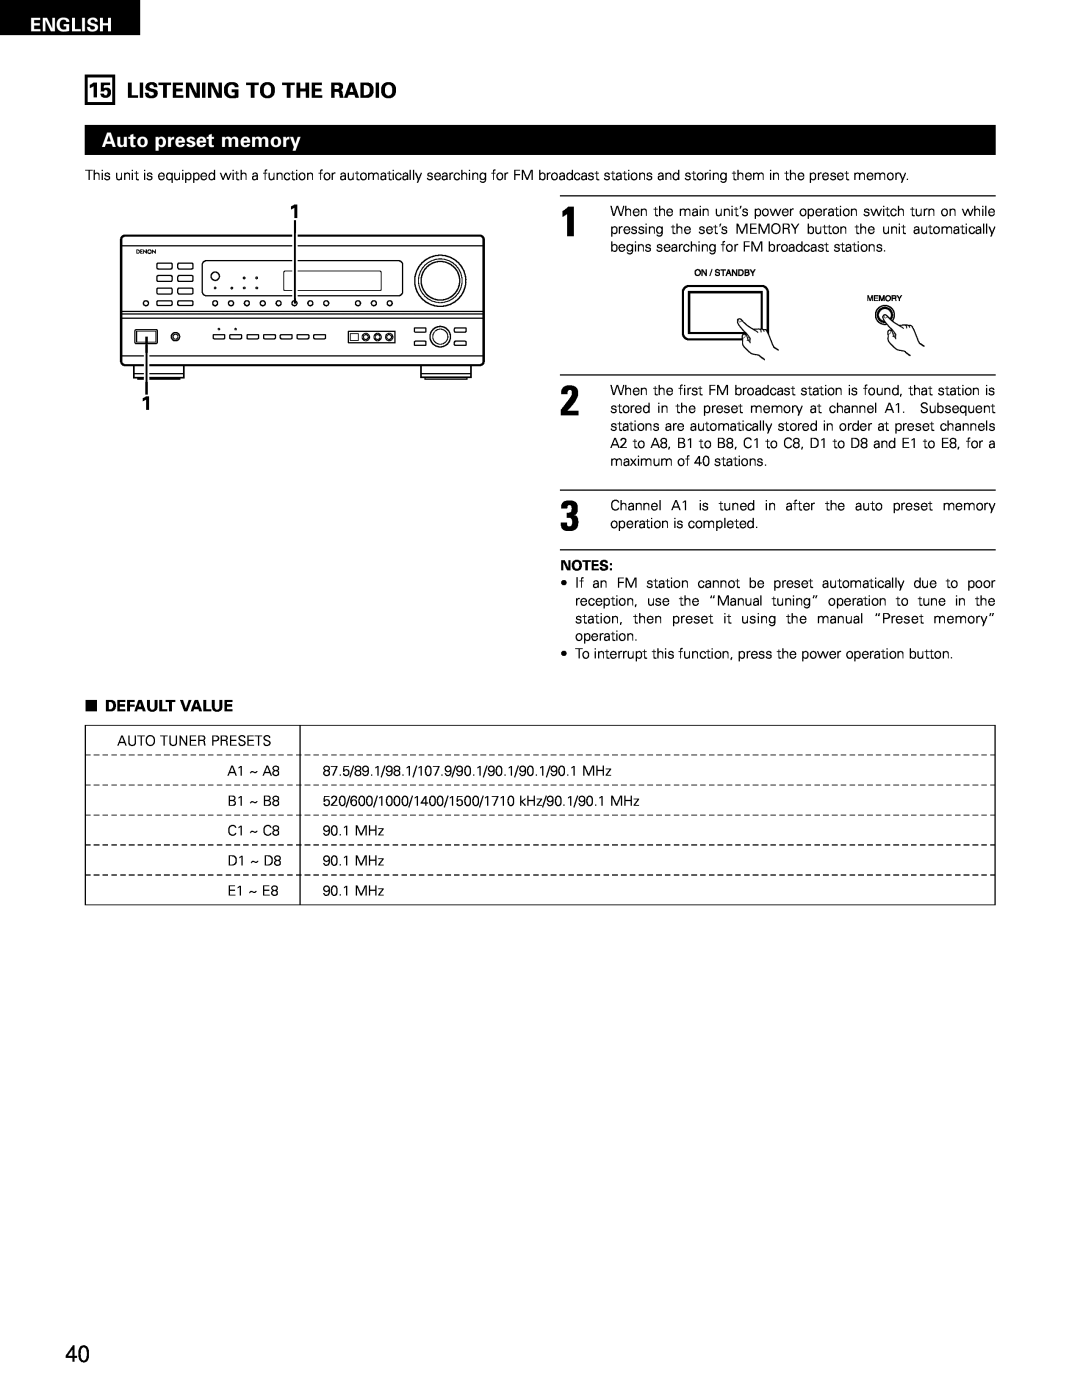 Denon AVR-1802/882 manual Listening To The Radio, Auto preset memory, English, 2DEFAULT VALUE 